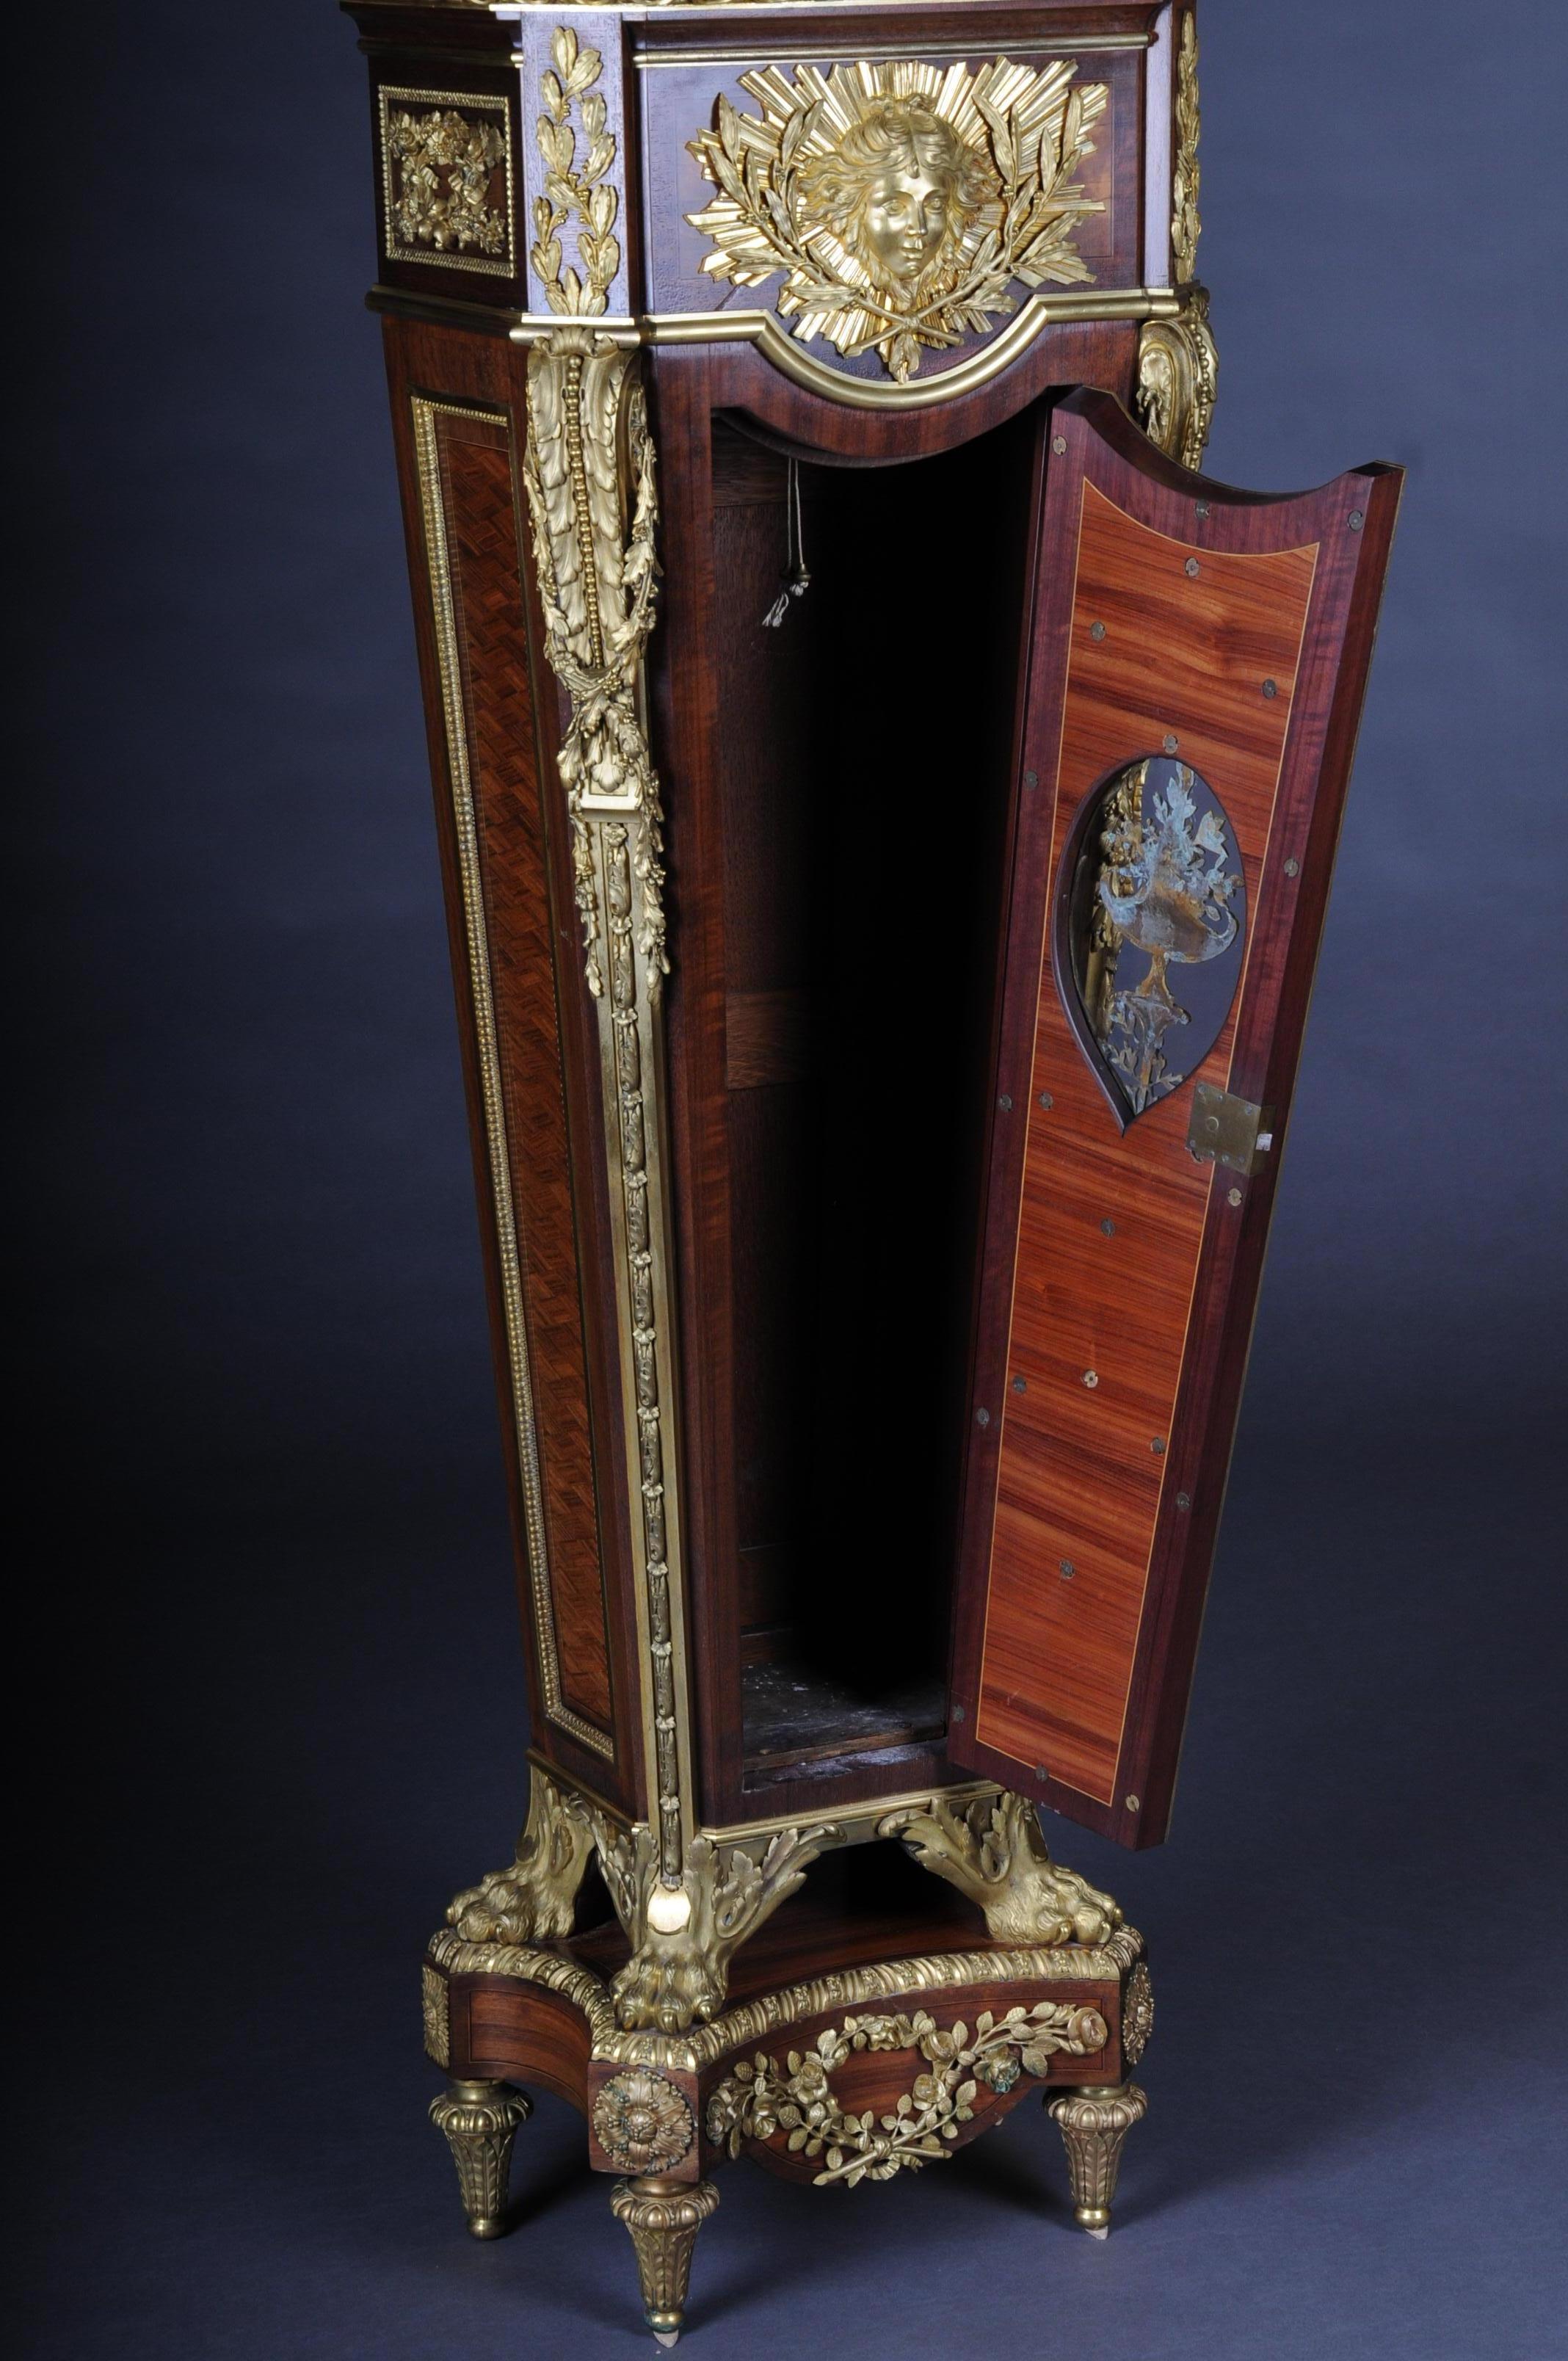 Napoleon III Pedestal Clock “Parquet Regulator” after Jean-Henri Riesener, 1734 For Sale 11